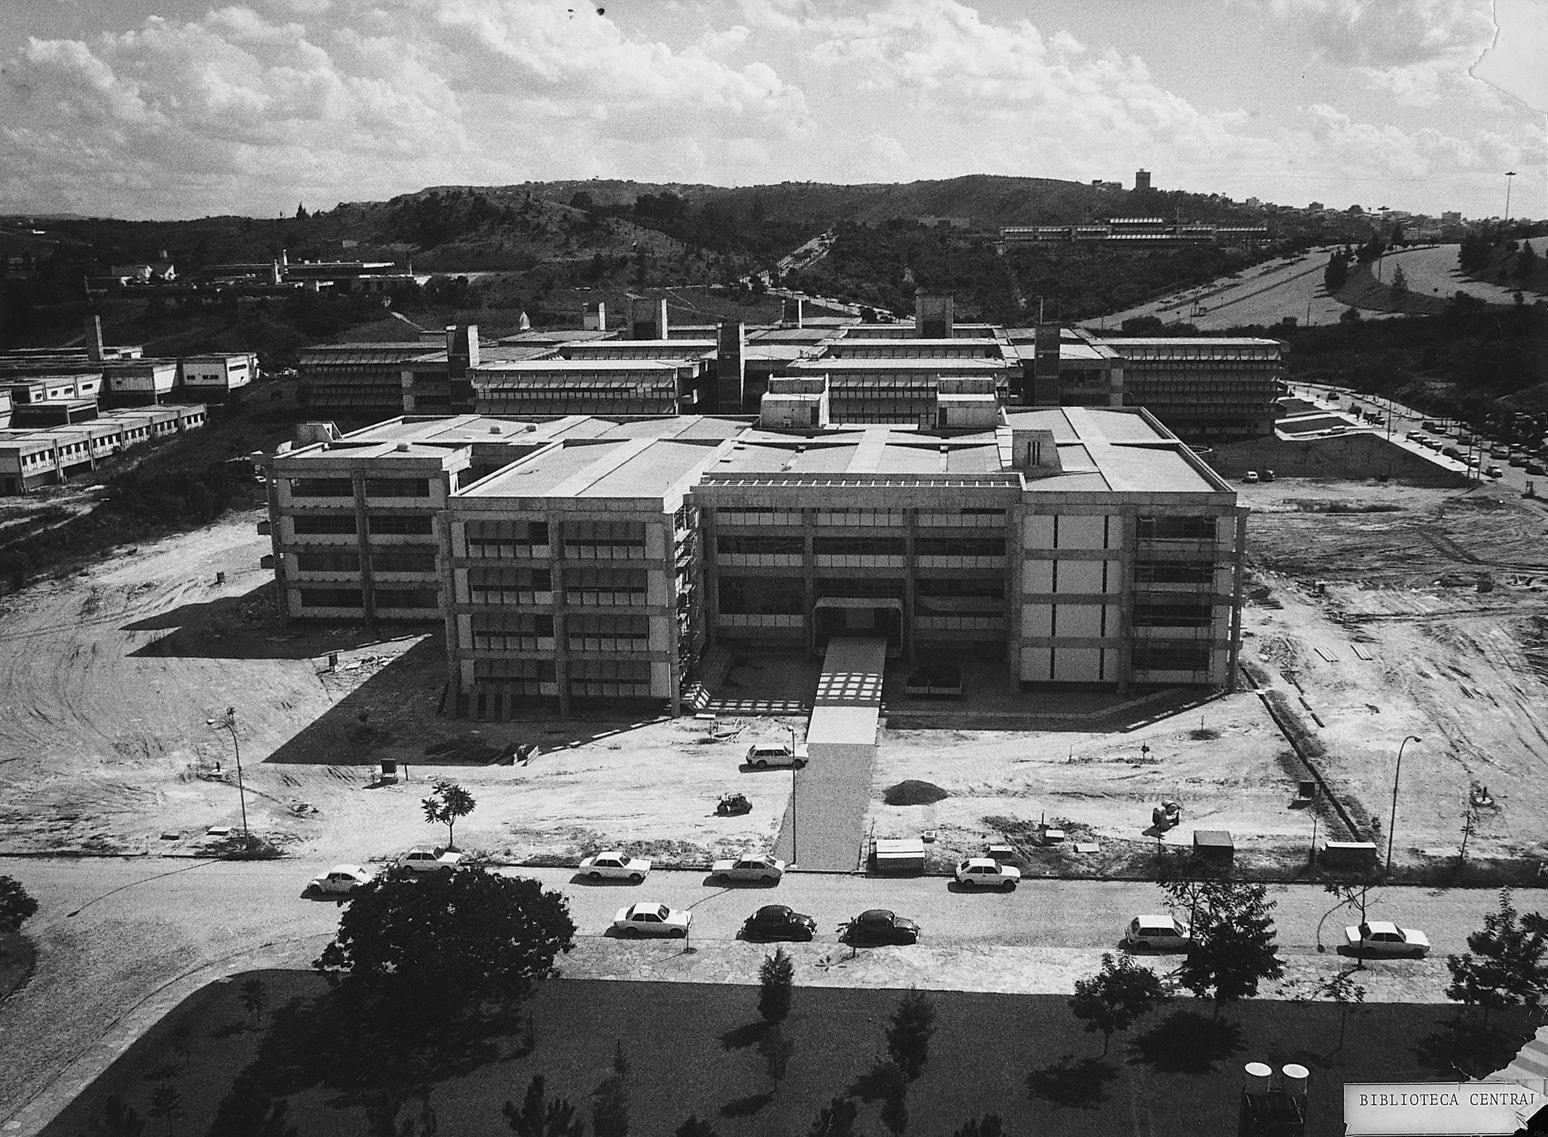 UFMG - Universidade Federal de Minas Gerais - Superman de 1978 volta aos  cinemas de BH